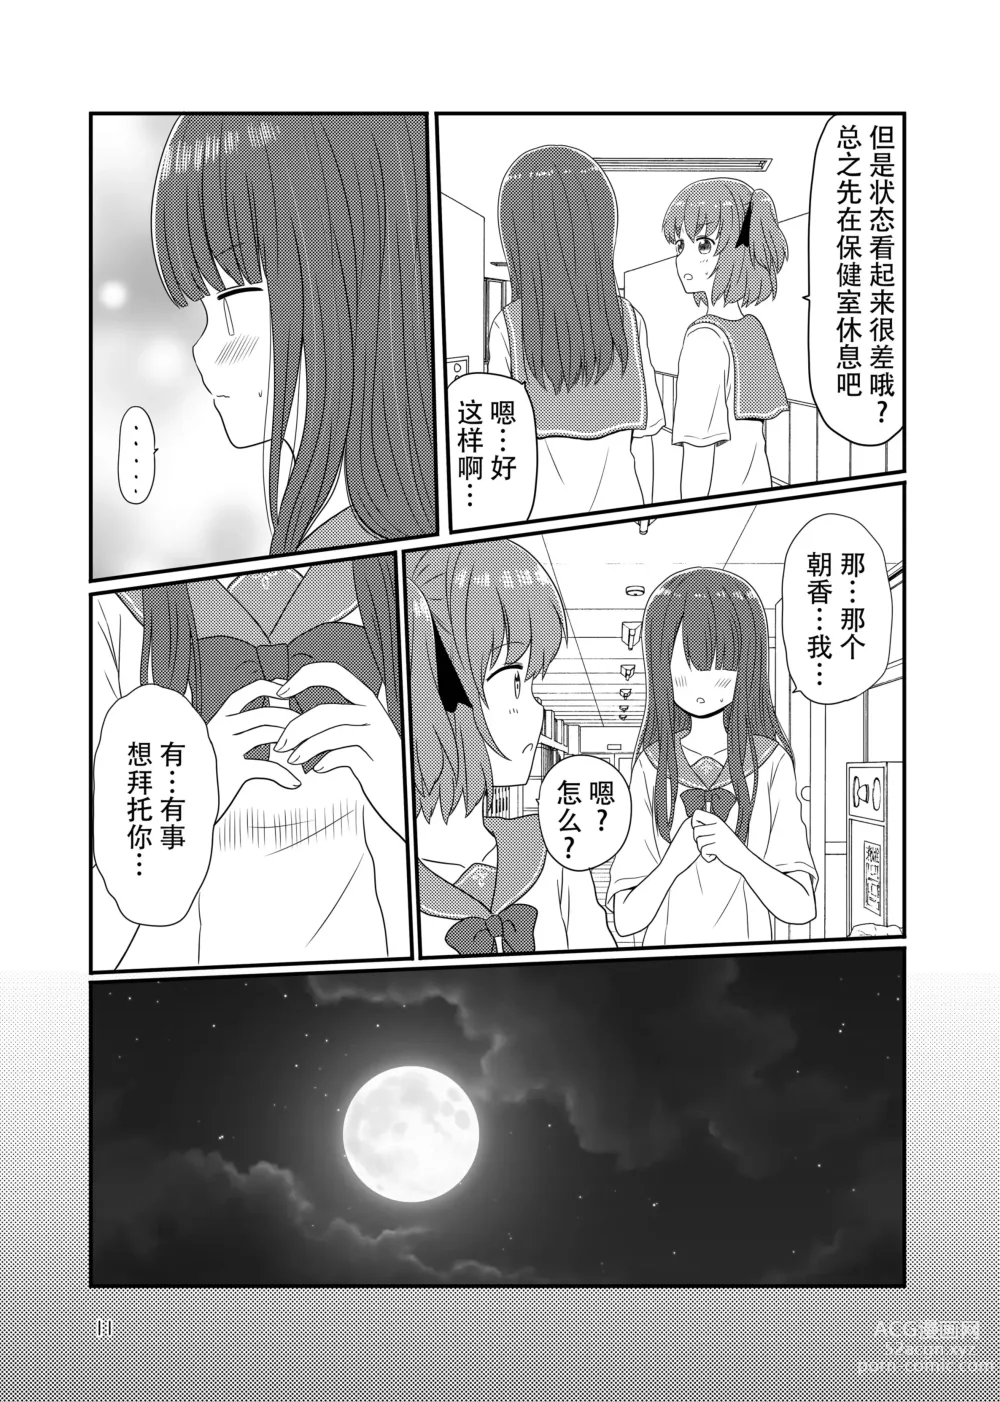 Page 9 of manga Roshutsu Play suru Yuripple